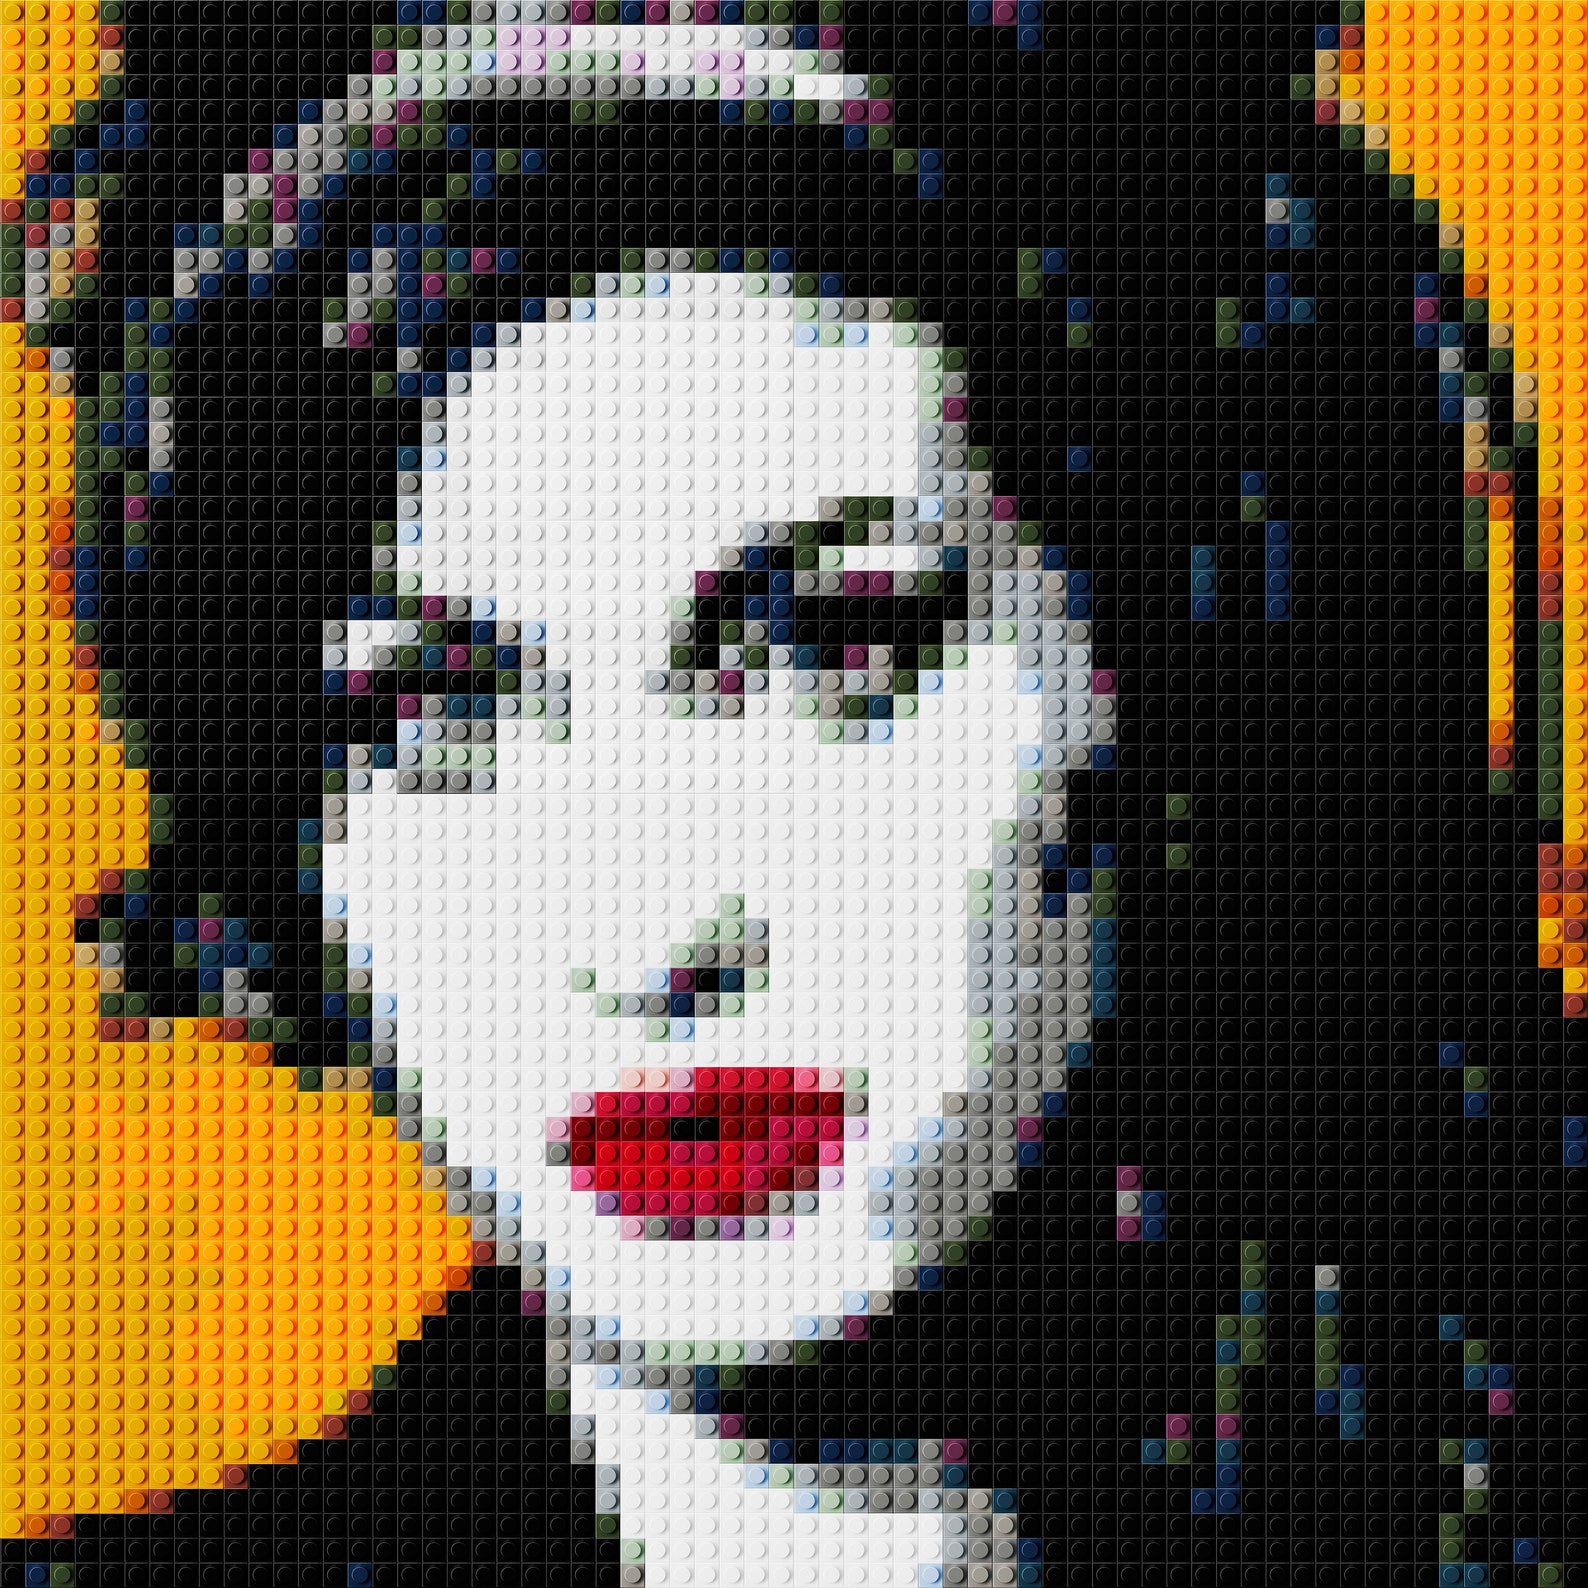 Amy Winehouse Brick Mosaic Portrait/Bricks Jigsaw | Etsy